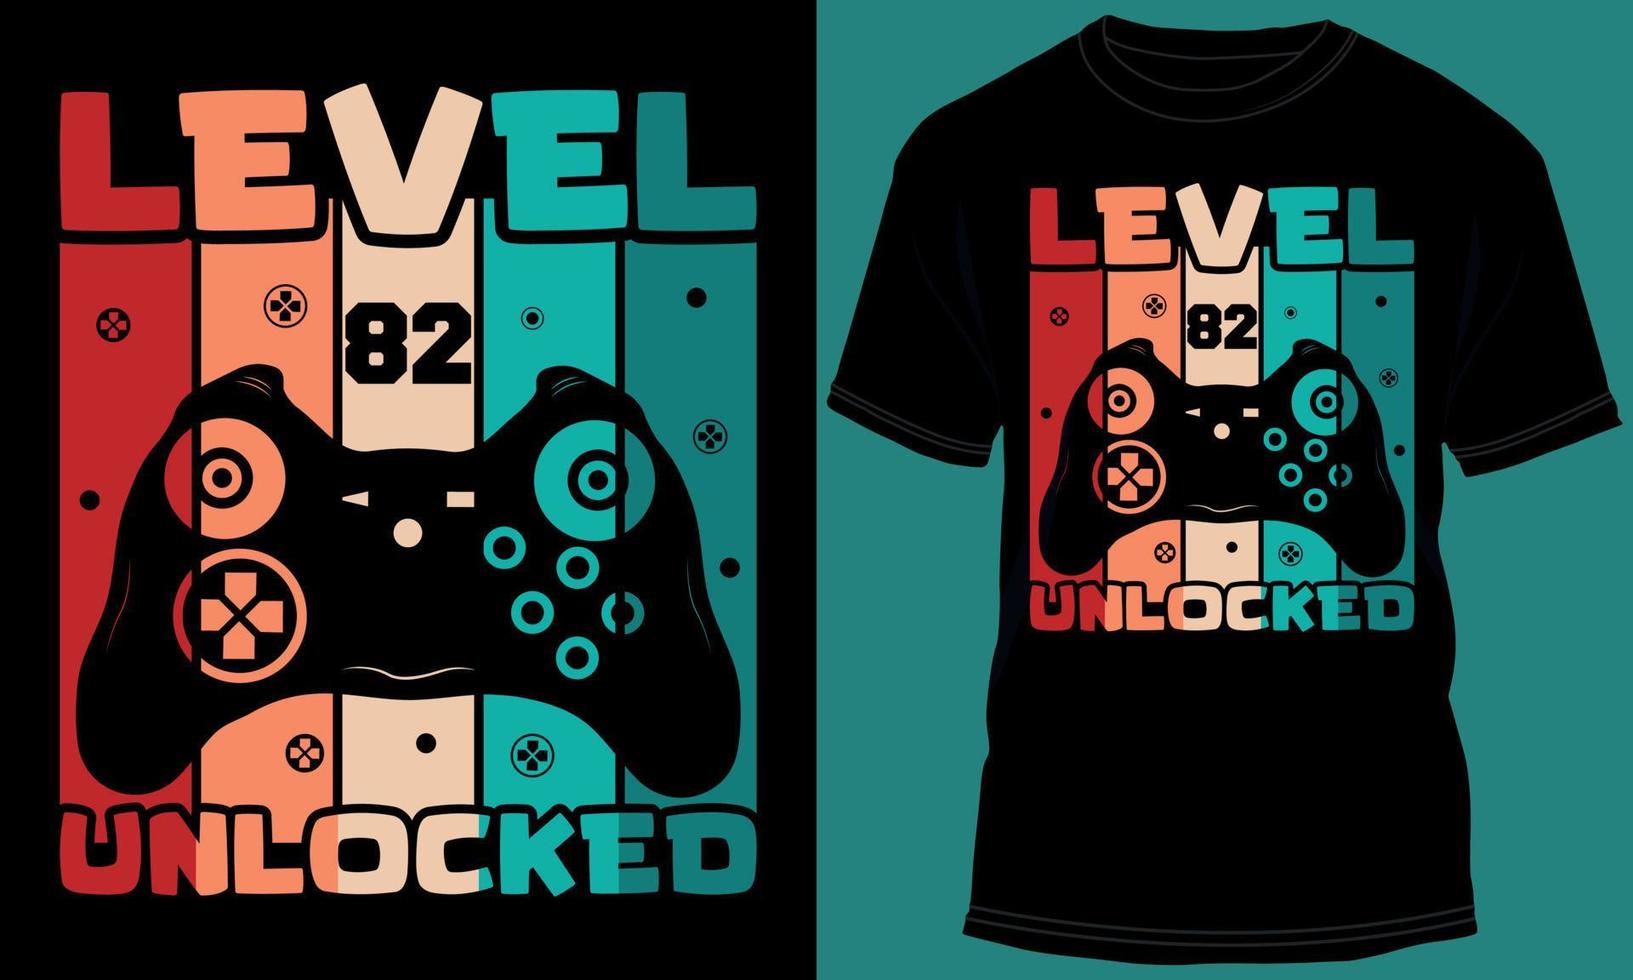 Gamer or Gaming Level 82 Unlocked Tshirt Design vector